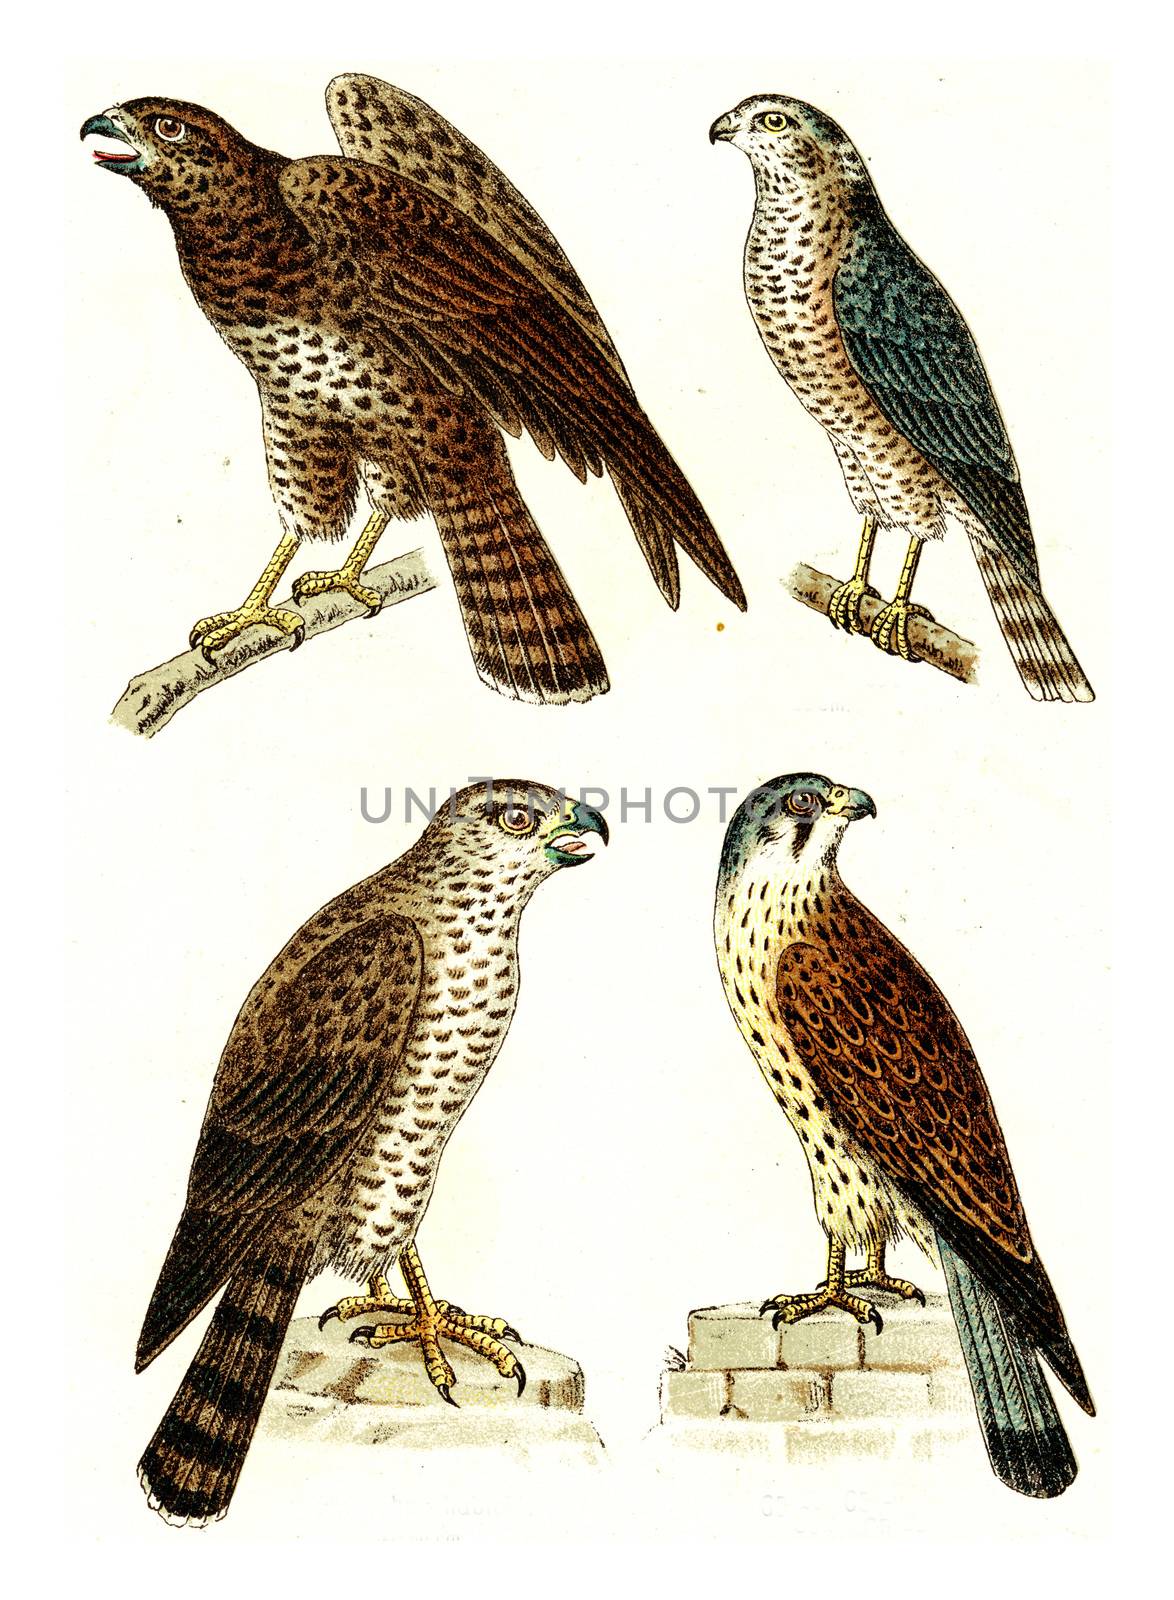 Common Buzzard, Sparrowhawk, Northern goshawk, Common kestrel, vintage engraved illustration. From Deutch Birds of Europe Atlas.
